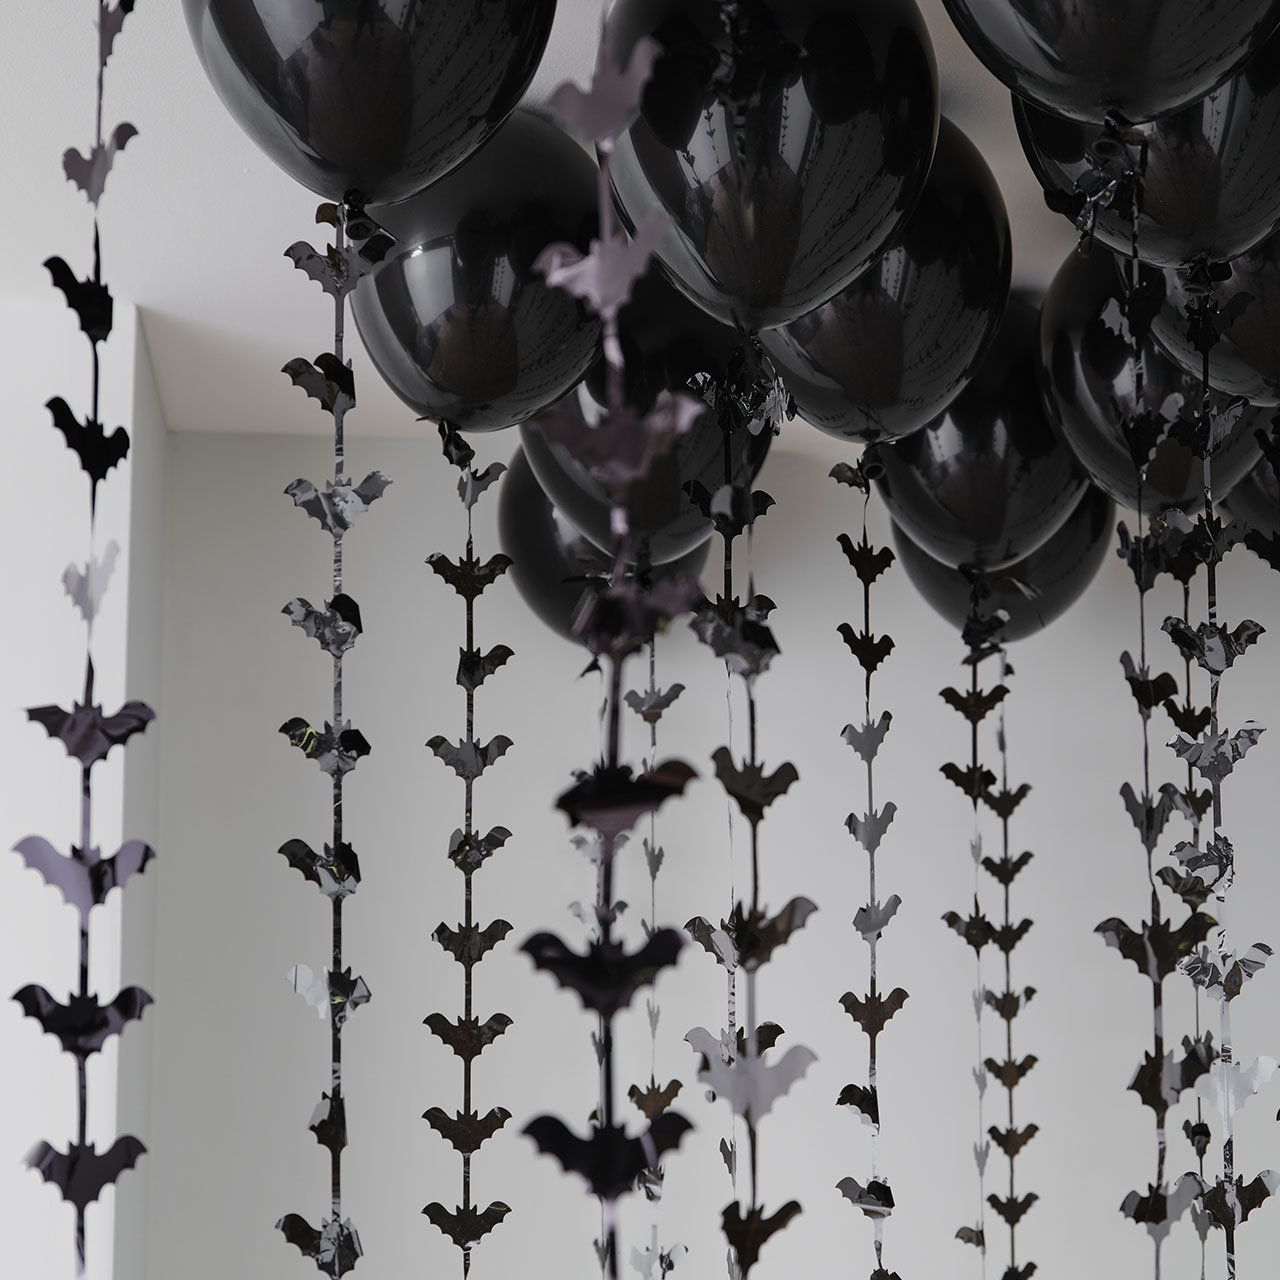 Balloon Ceiling Kit - Black Bats